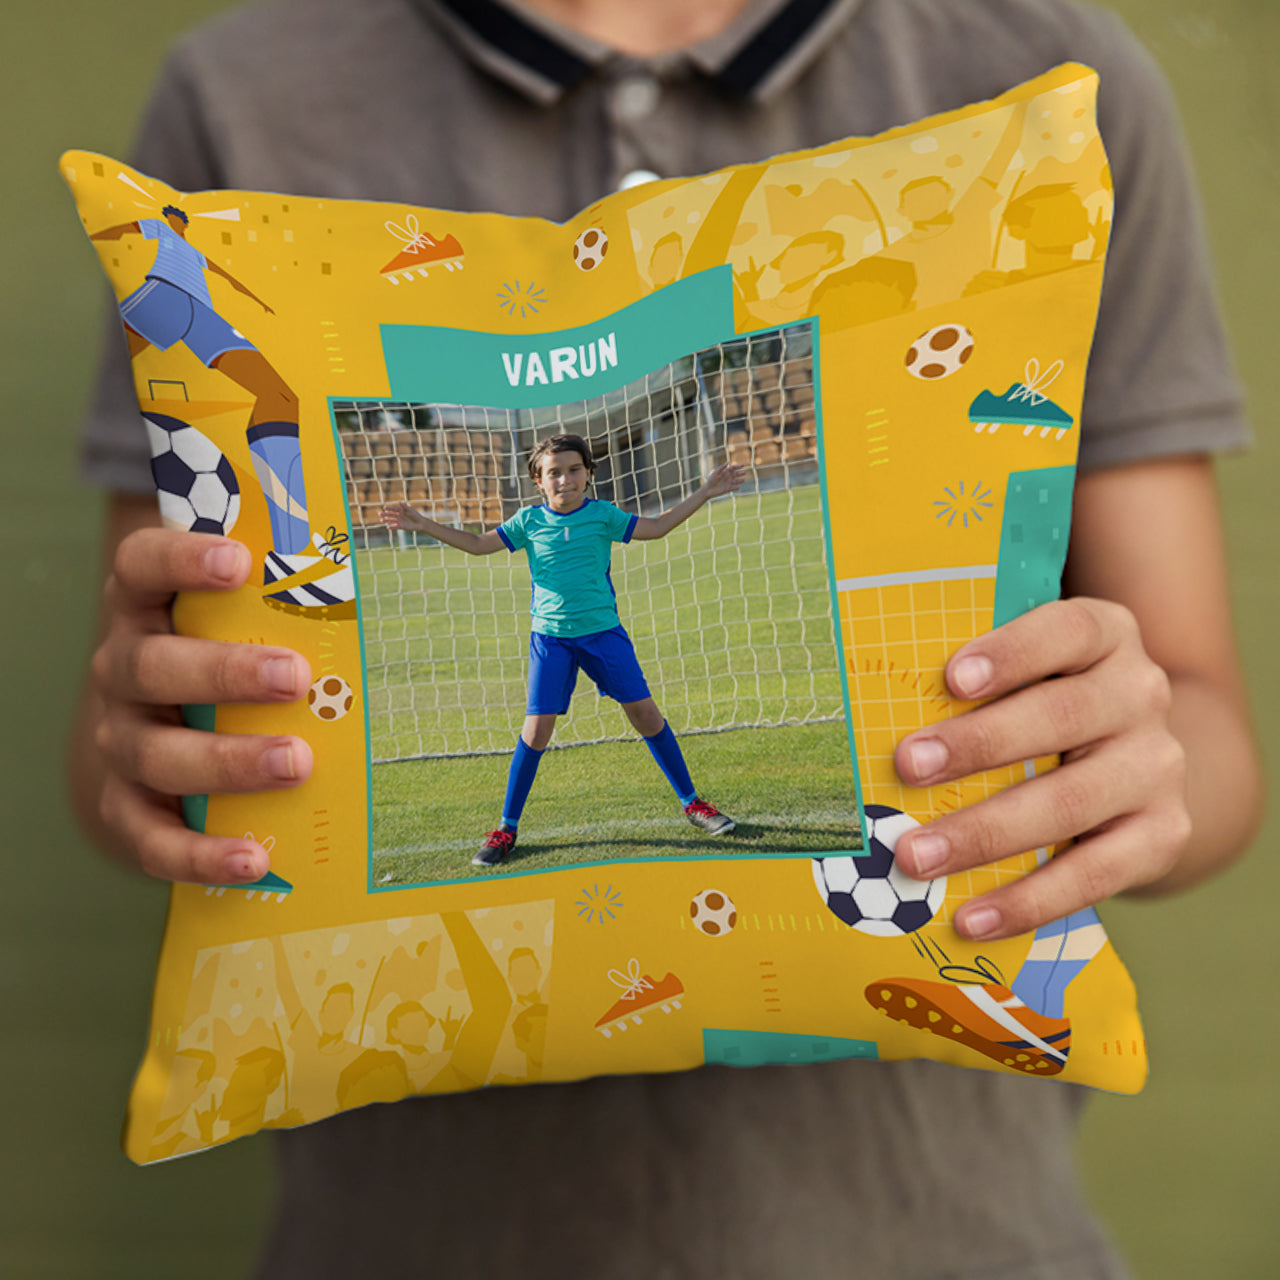 Personalised Photo Cushions - Football Goals, Boy